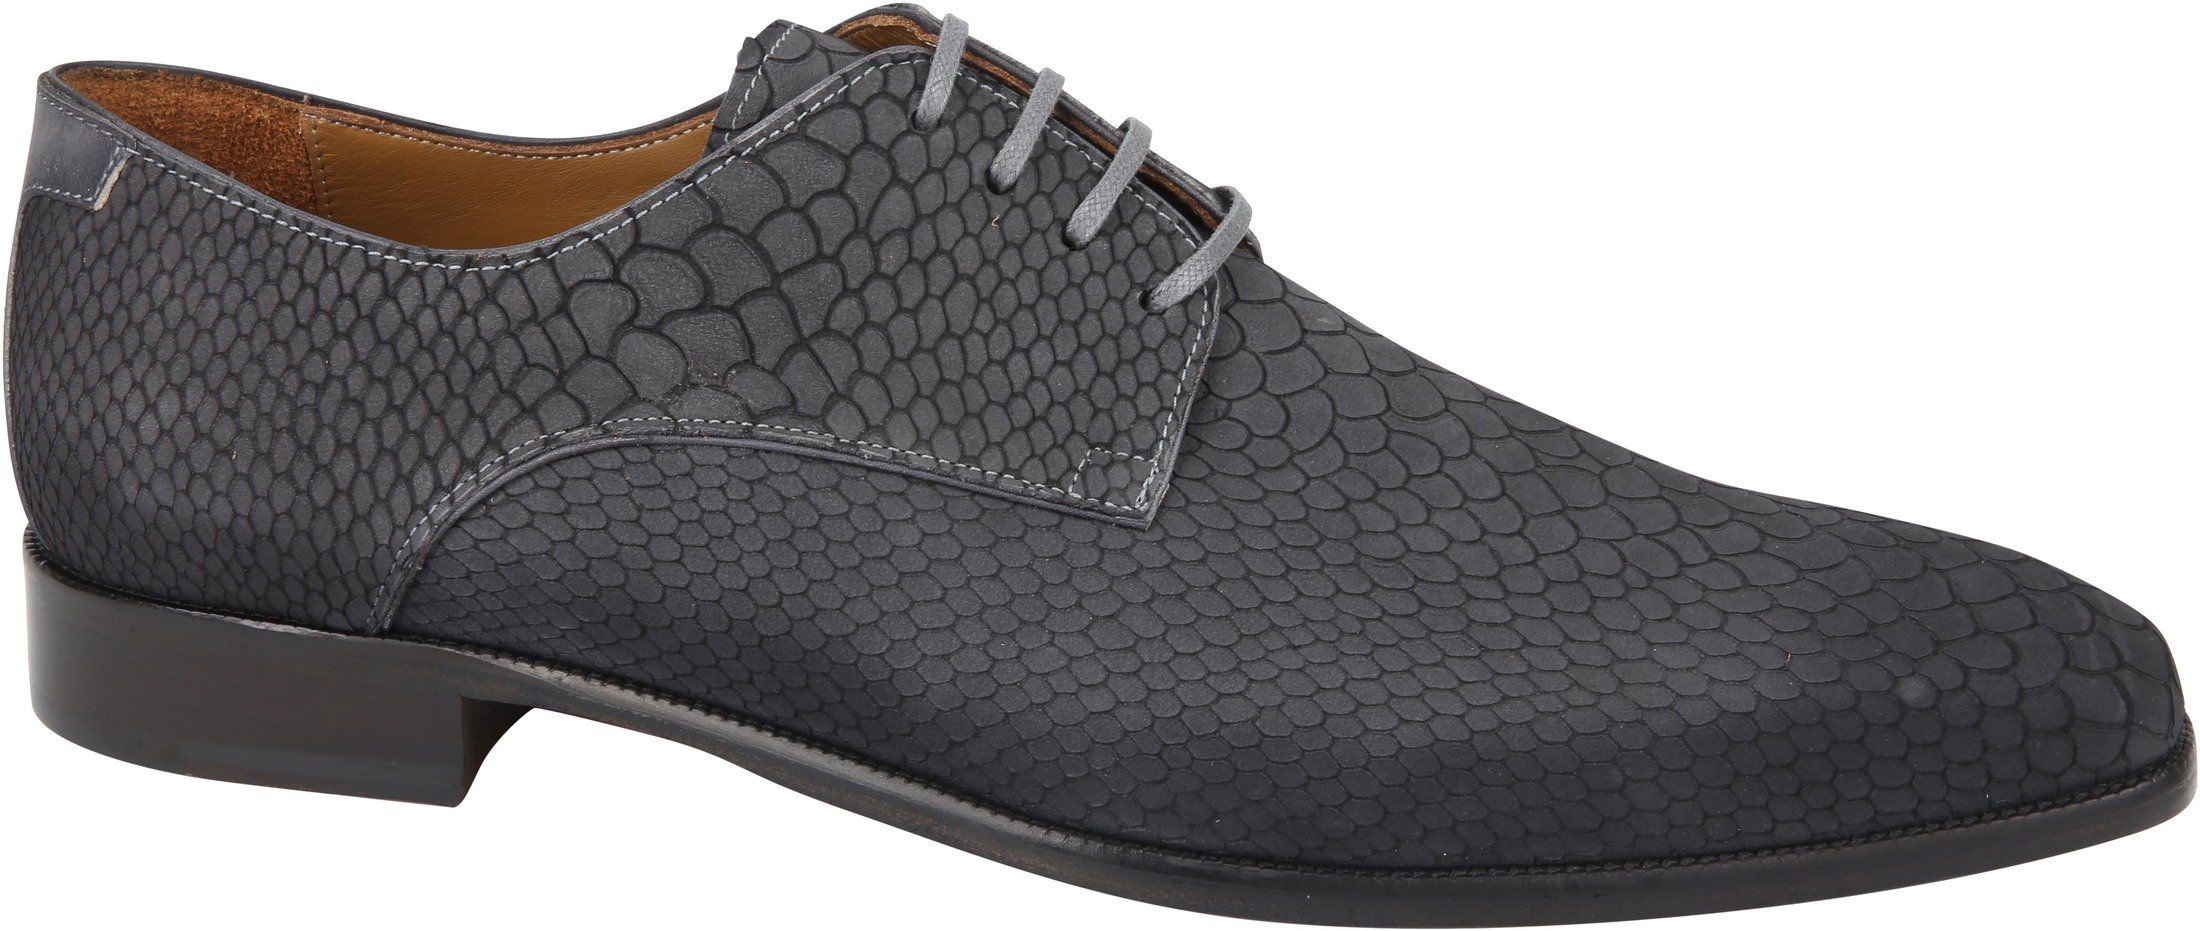 Melik Shoe Gulf Grey size 7.5